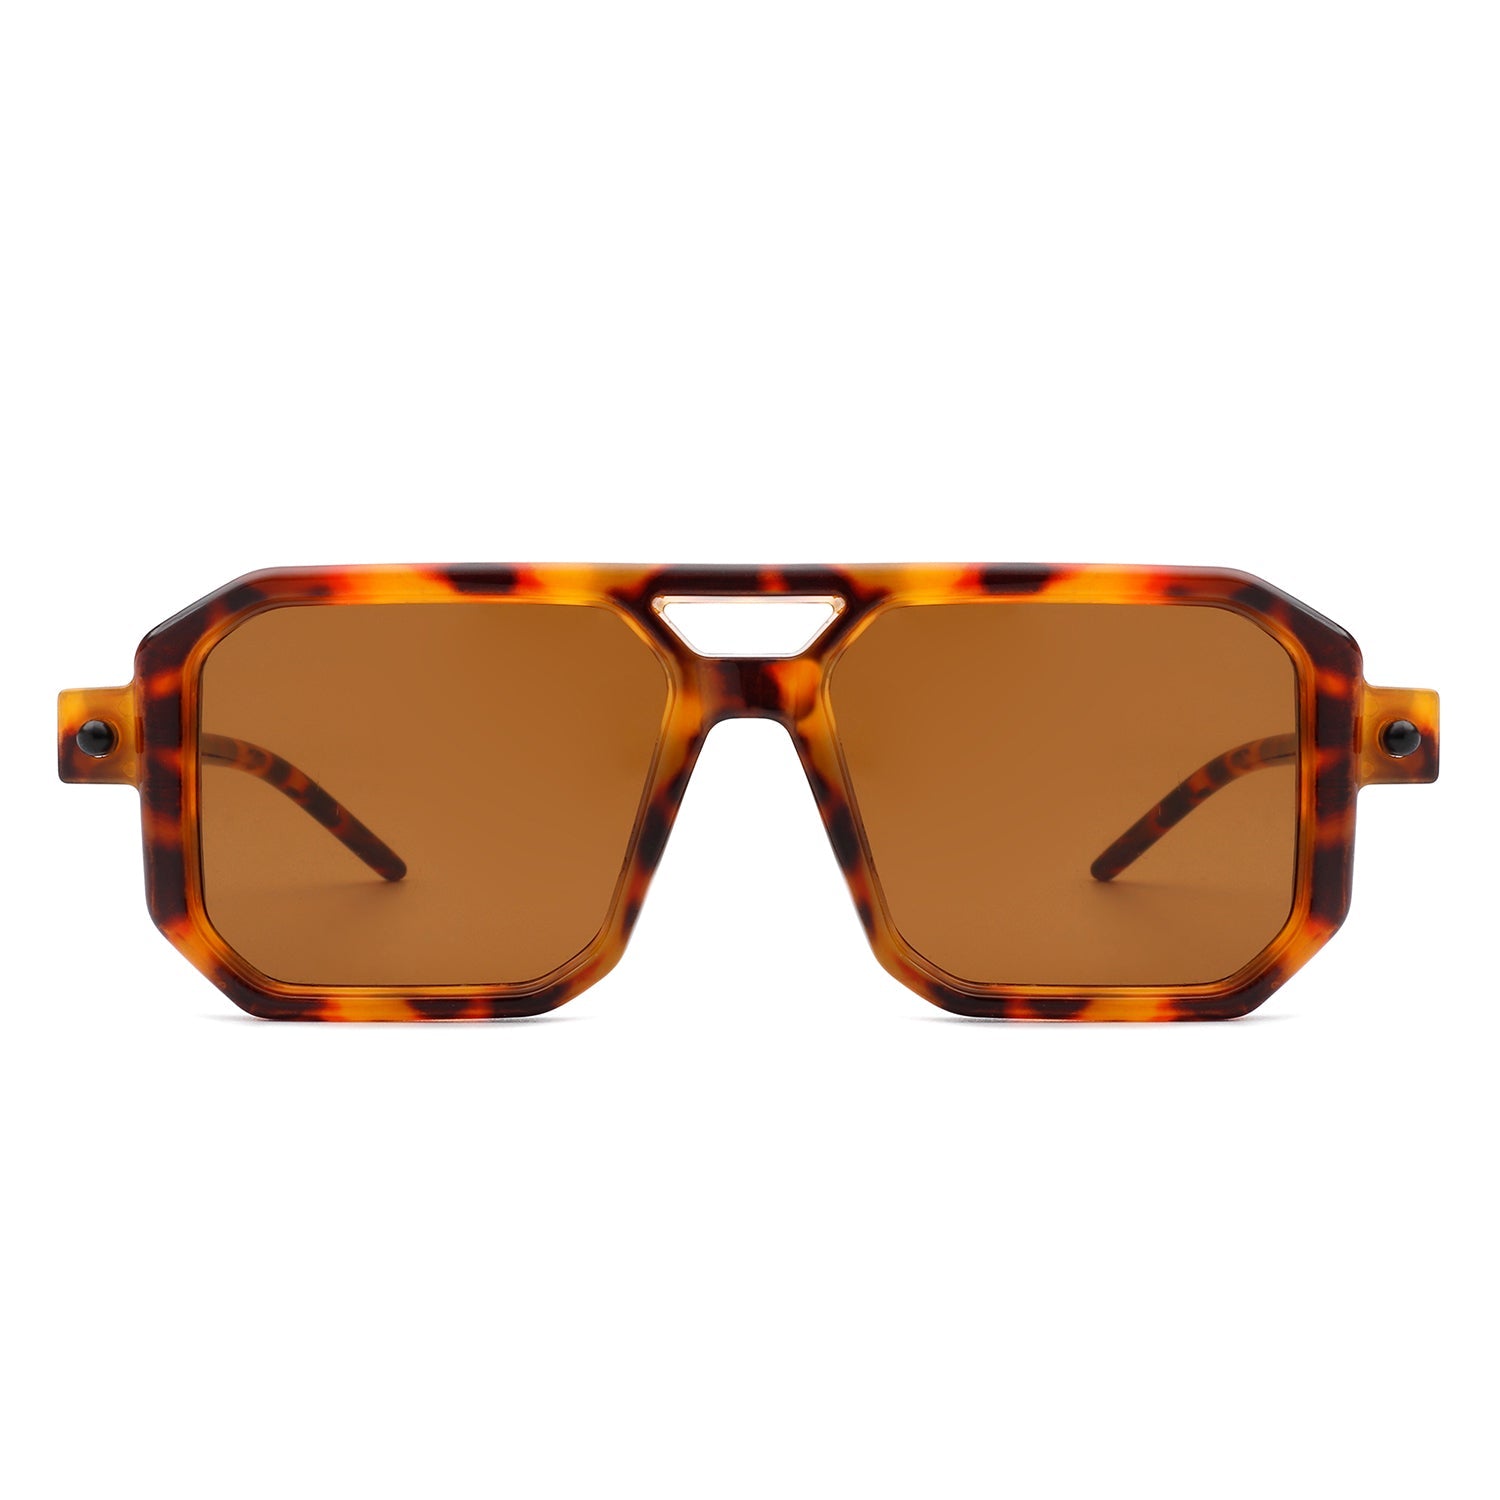 Bluebird - Retro Square Flat Top Brow-Bar Fashion Sunglasses-5